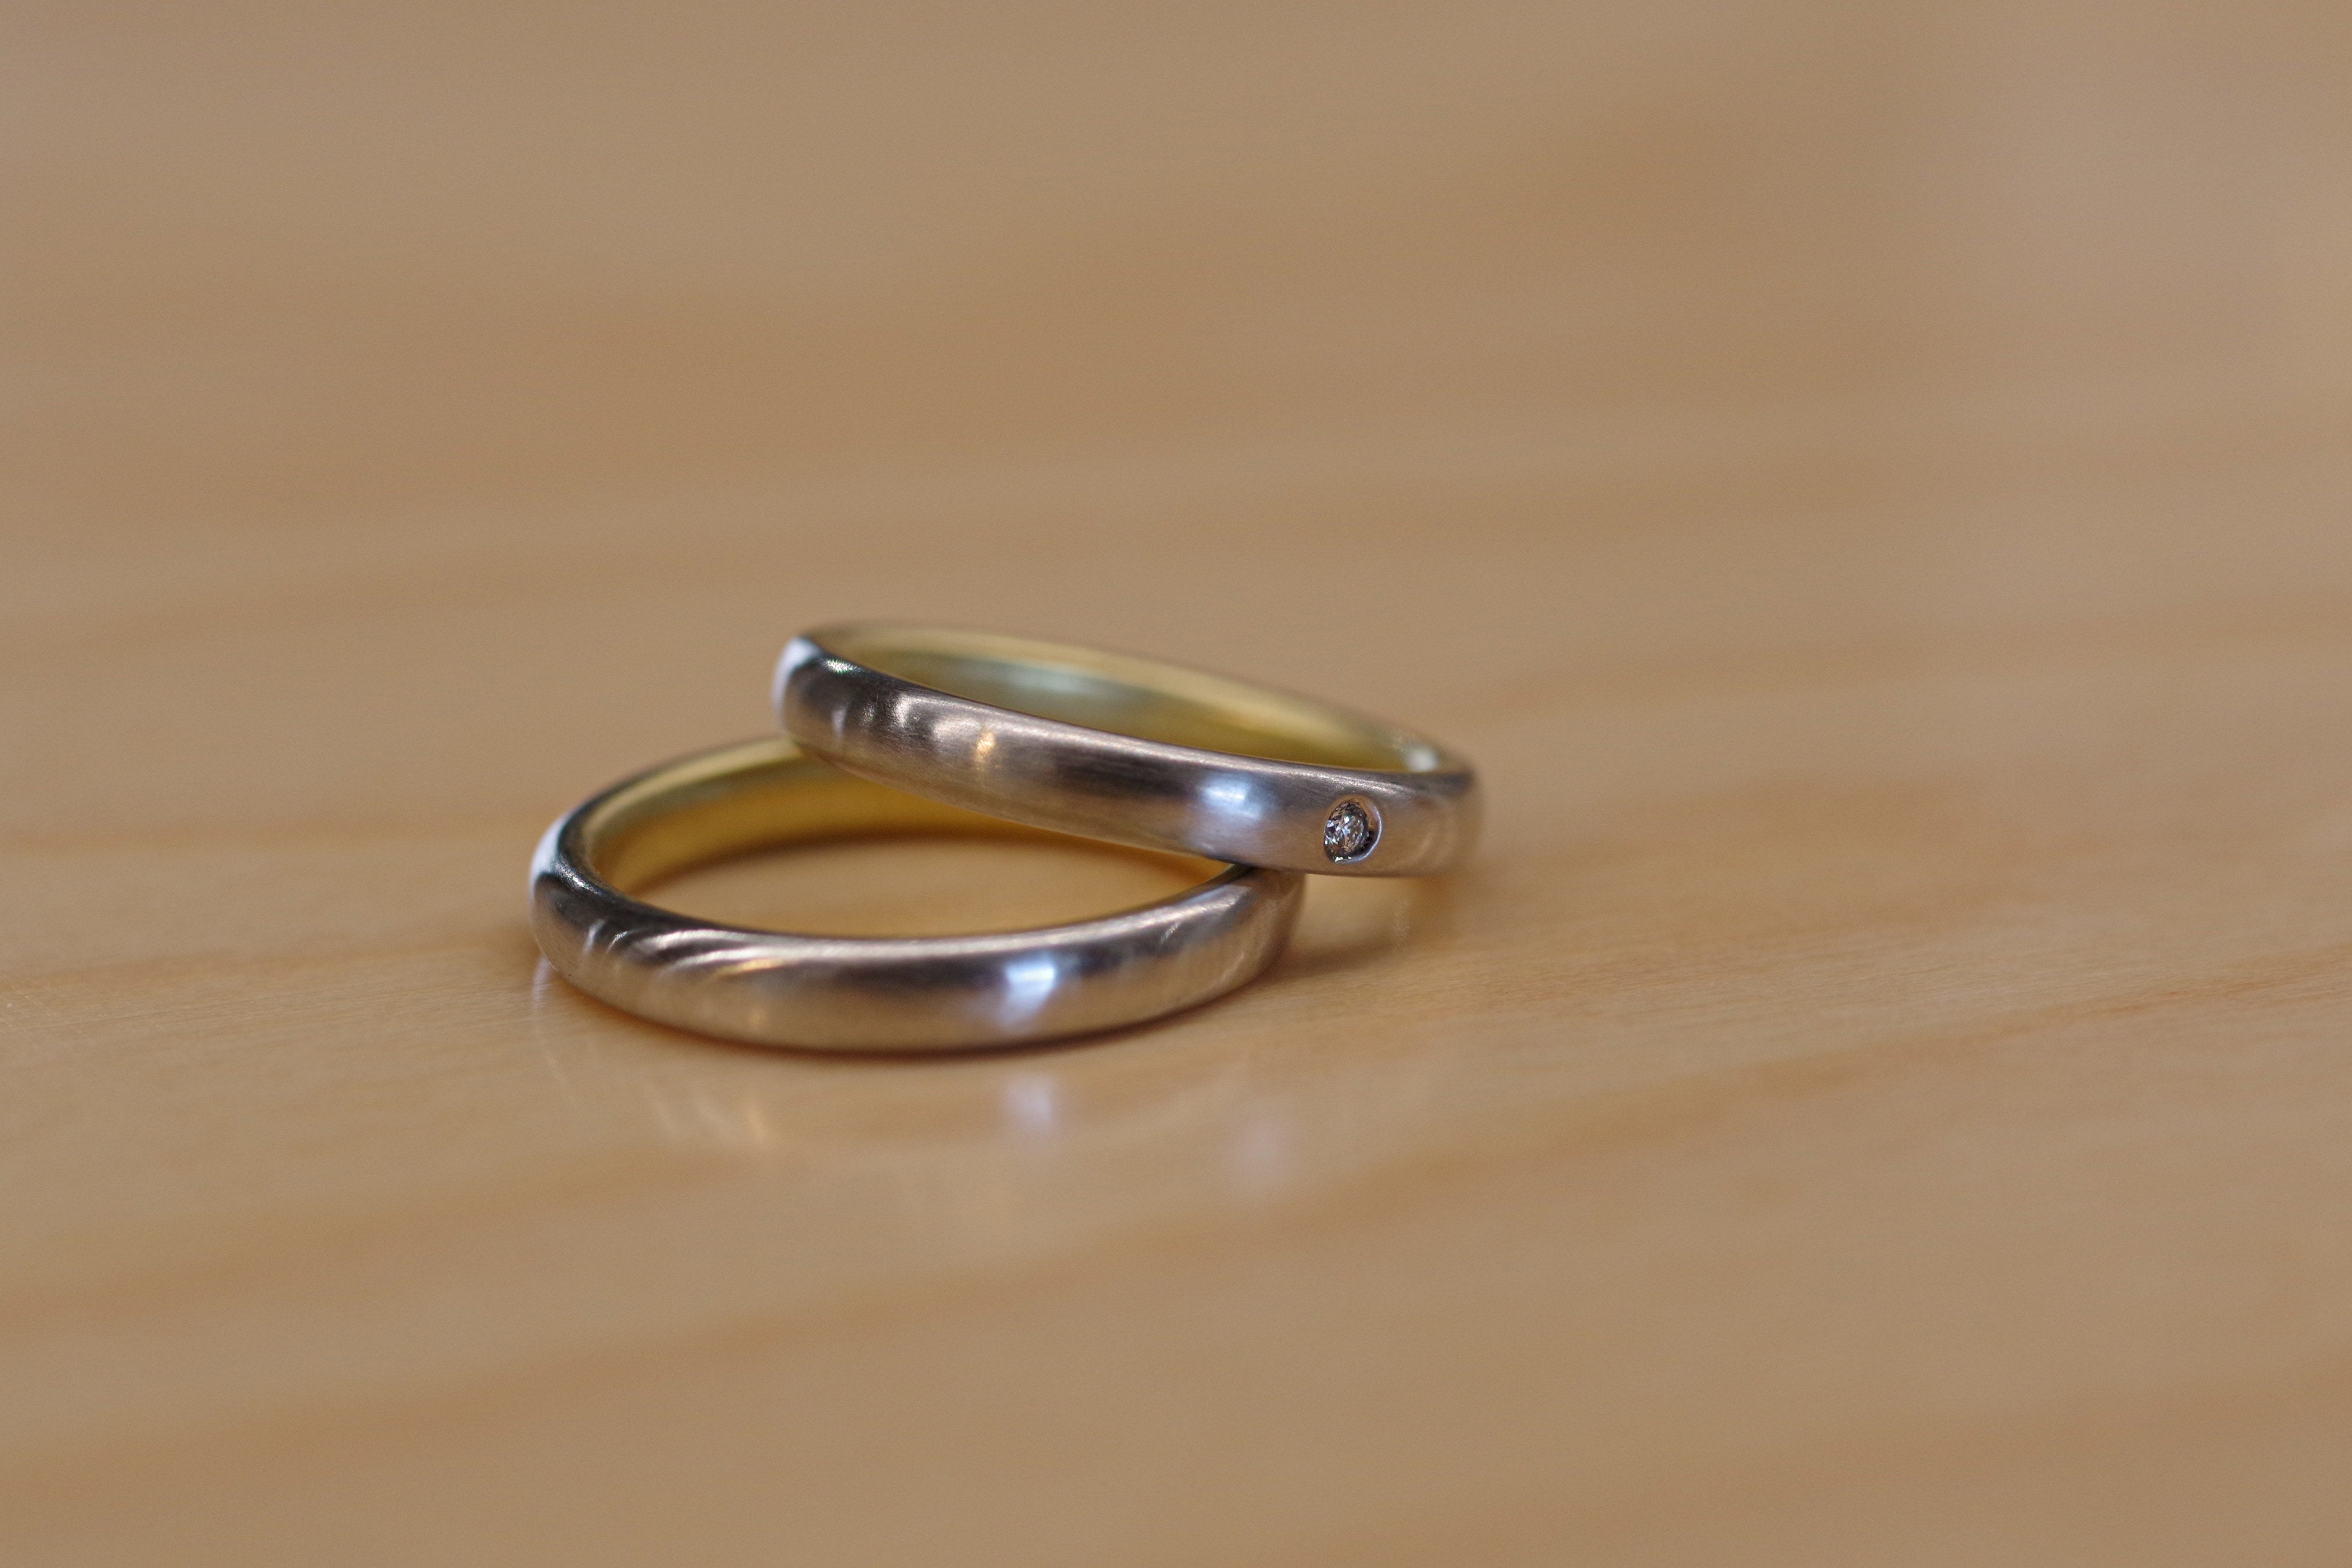 Workshop Nanokawa 本気で作る結婚指輪のすすめ